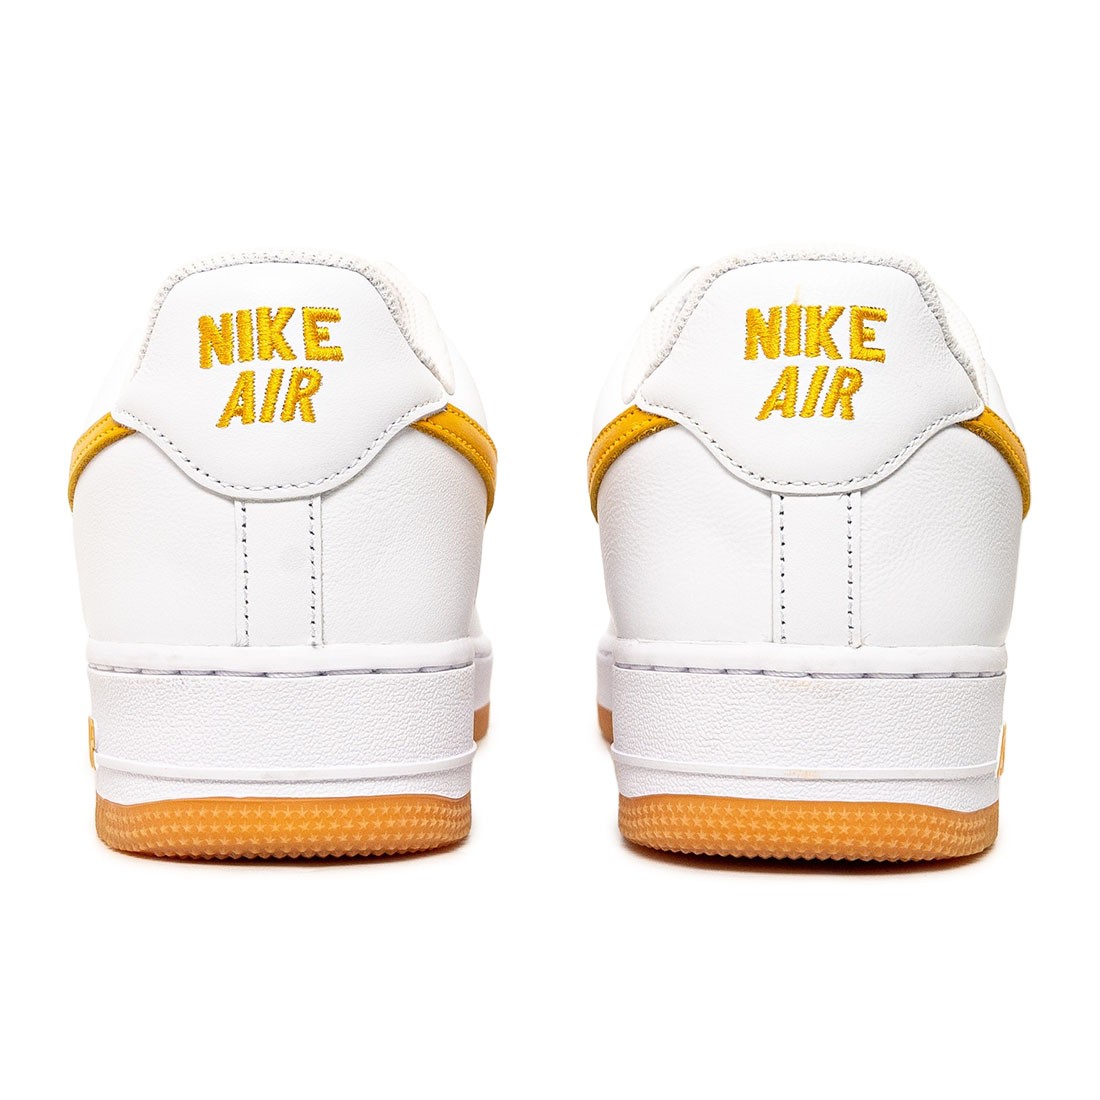 Nike Air Force 1 Low Retro - White / University Red / Gum / Yellow